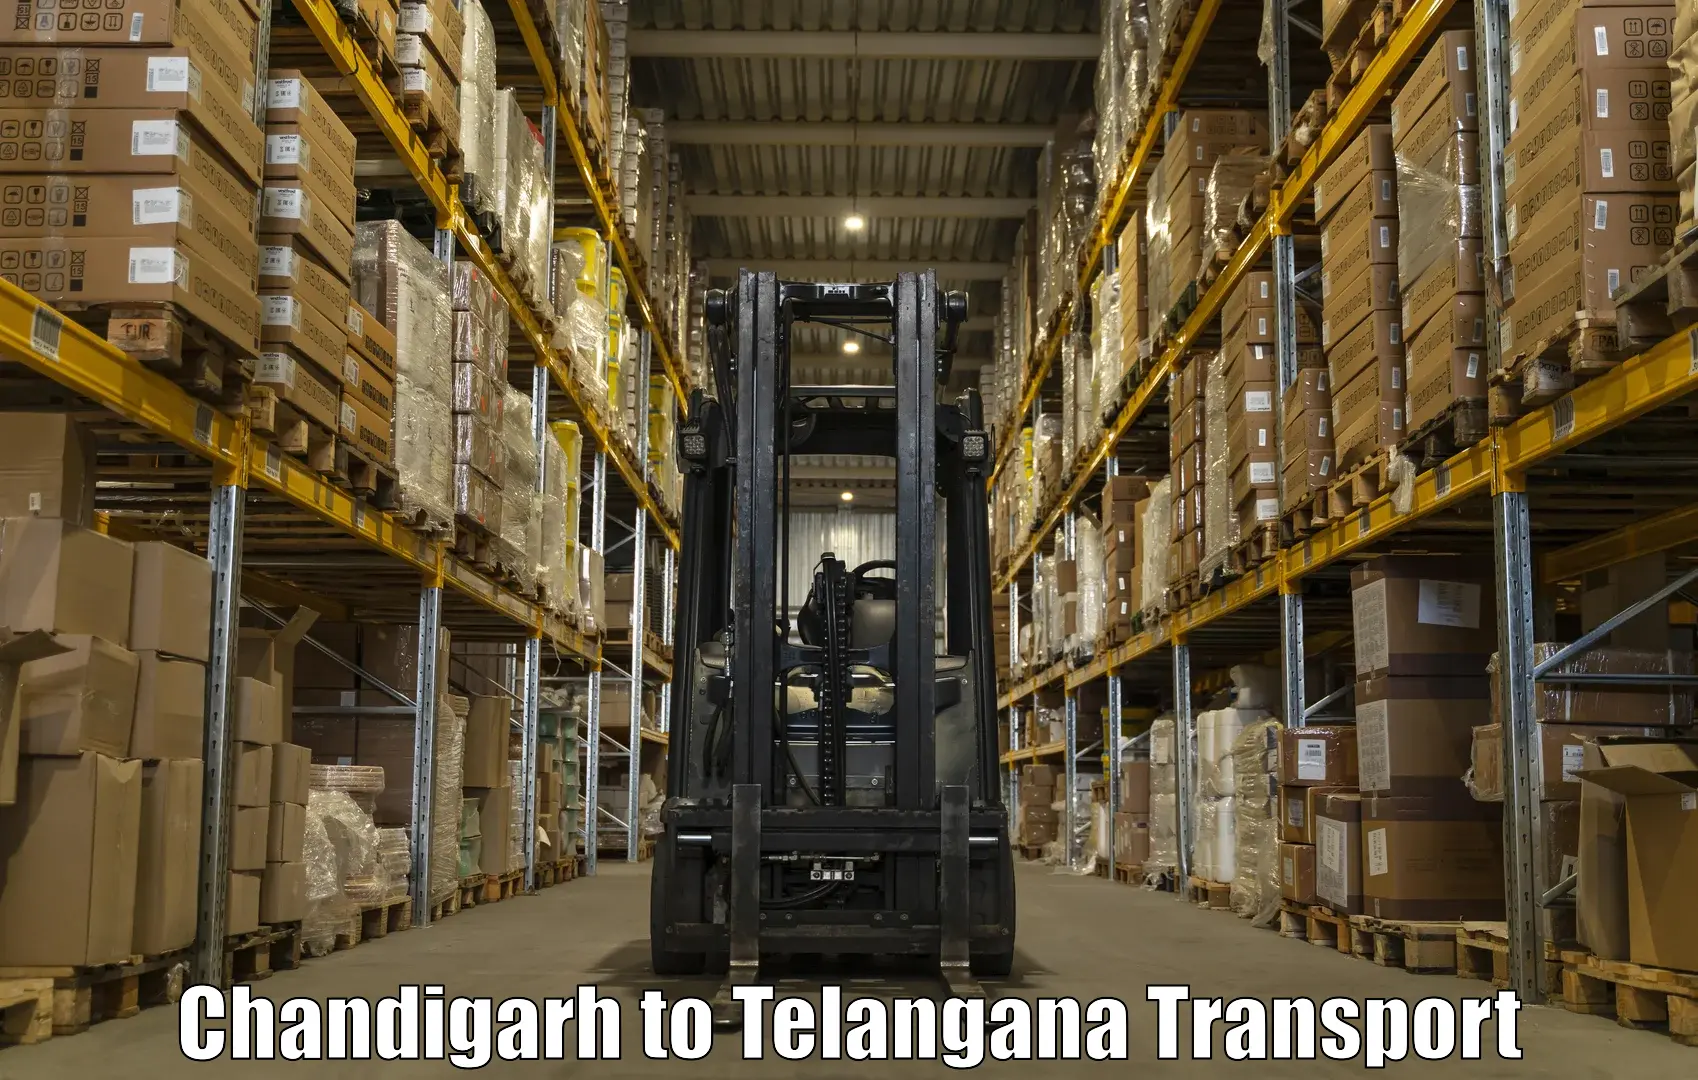 Shipping partner Chandigarh to Mudigonda